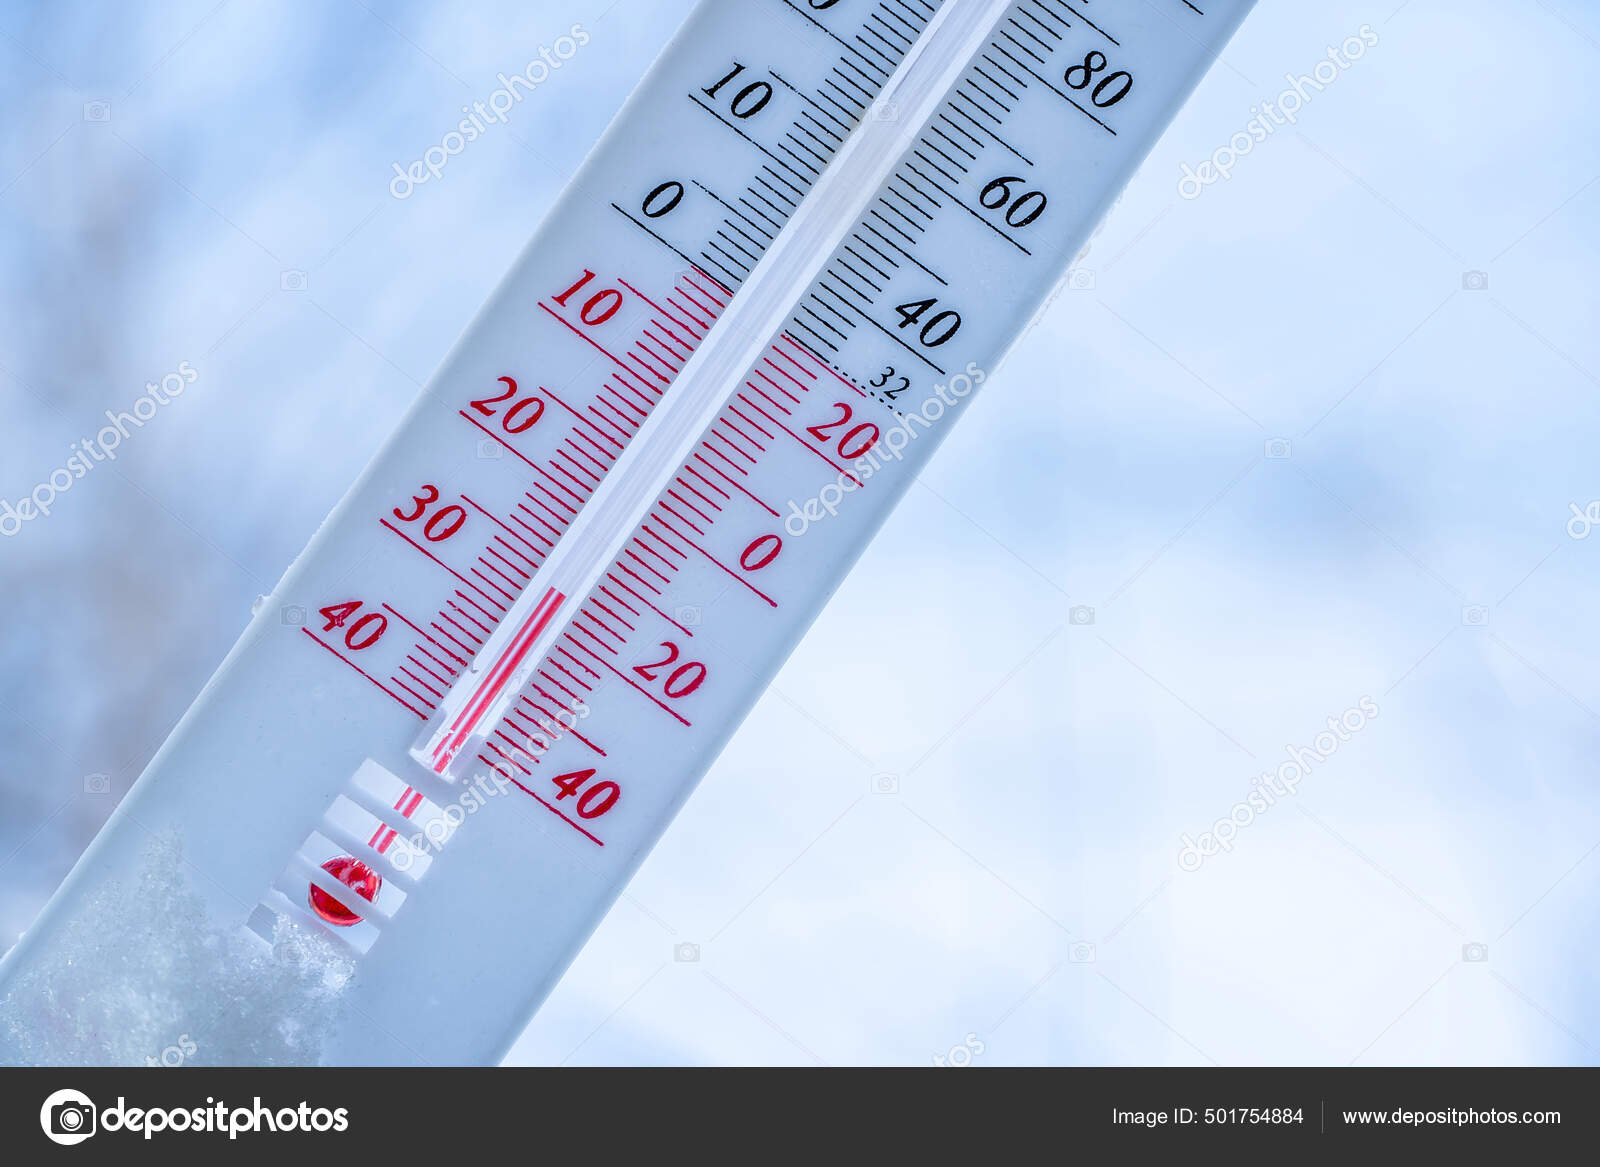 https://st3.depositphotos.com/29384342/50175/i/1600/depositphotos_501754884-stock-photo-thermometer-lies-snow-winter-showing.jpg